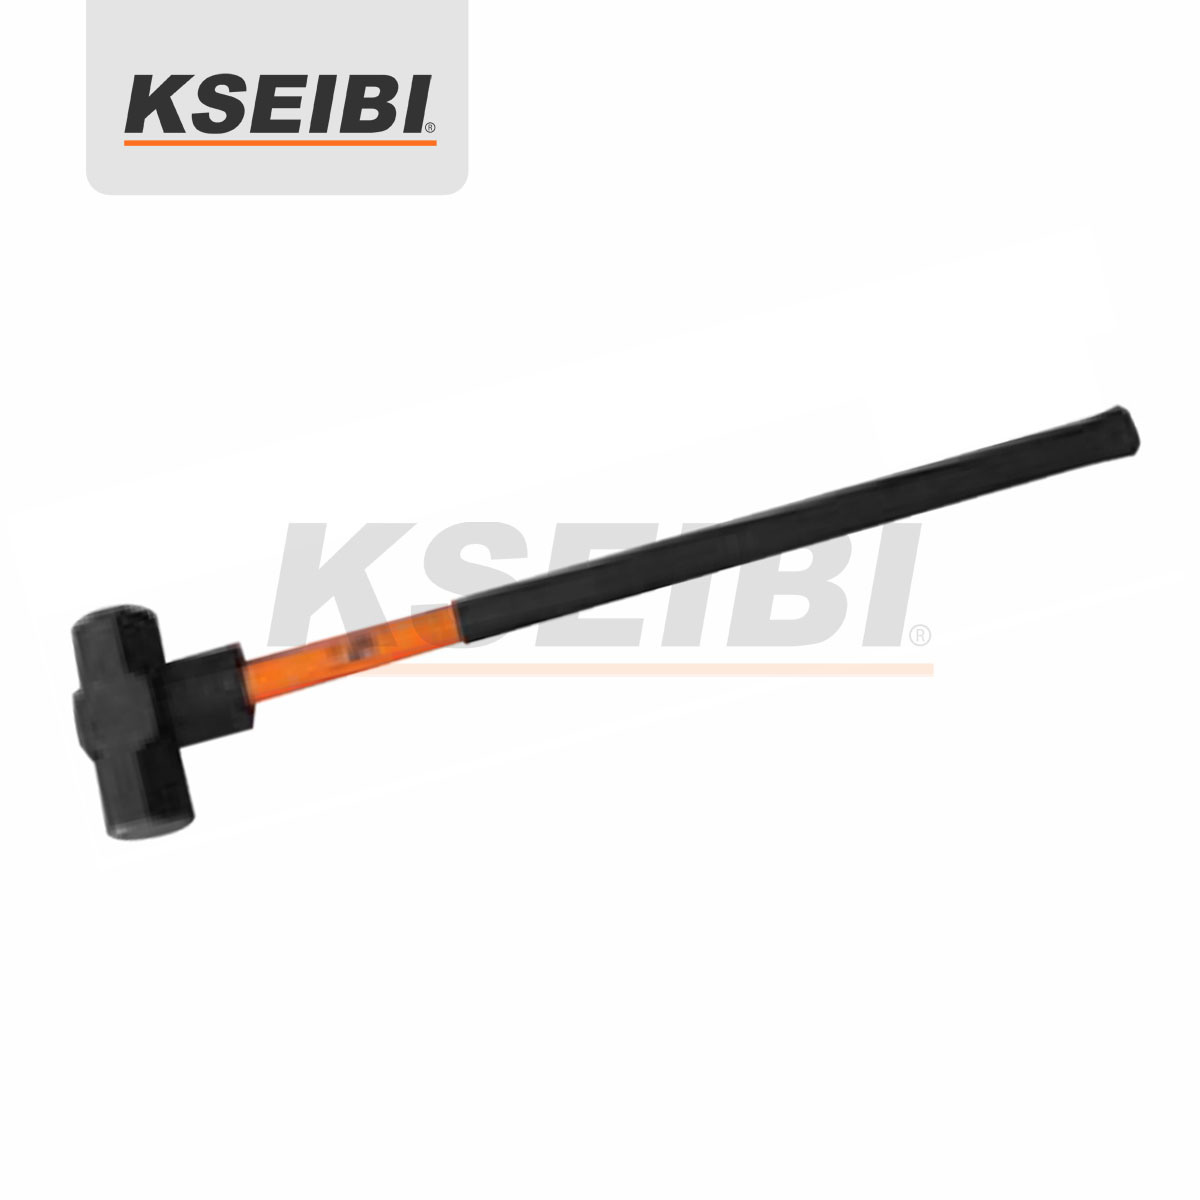 Kseibi Steel Sledge Hammer with Long Fiberglass Handle